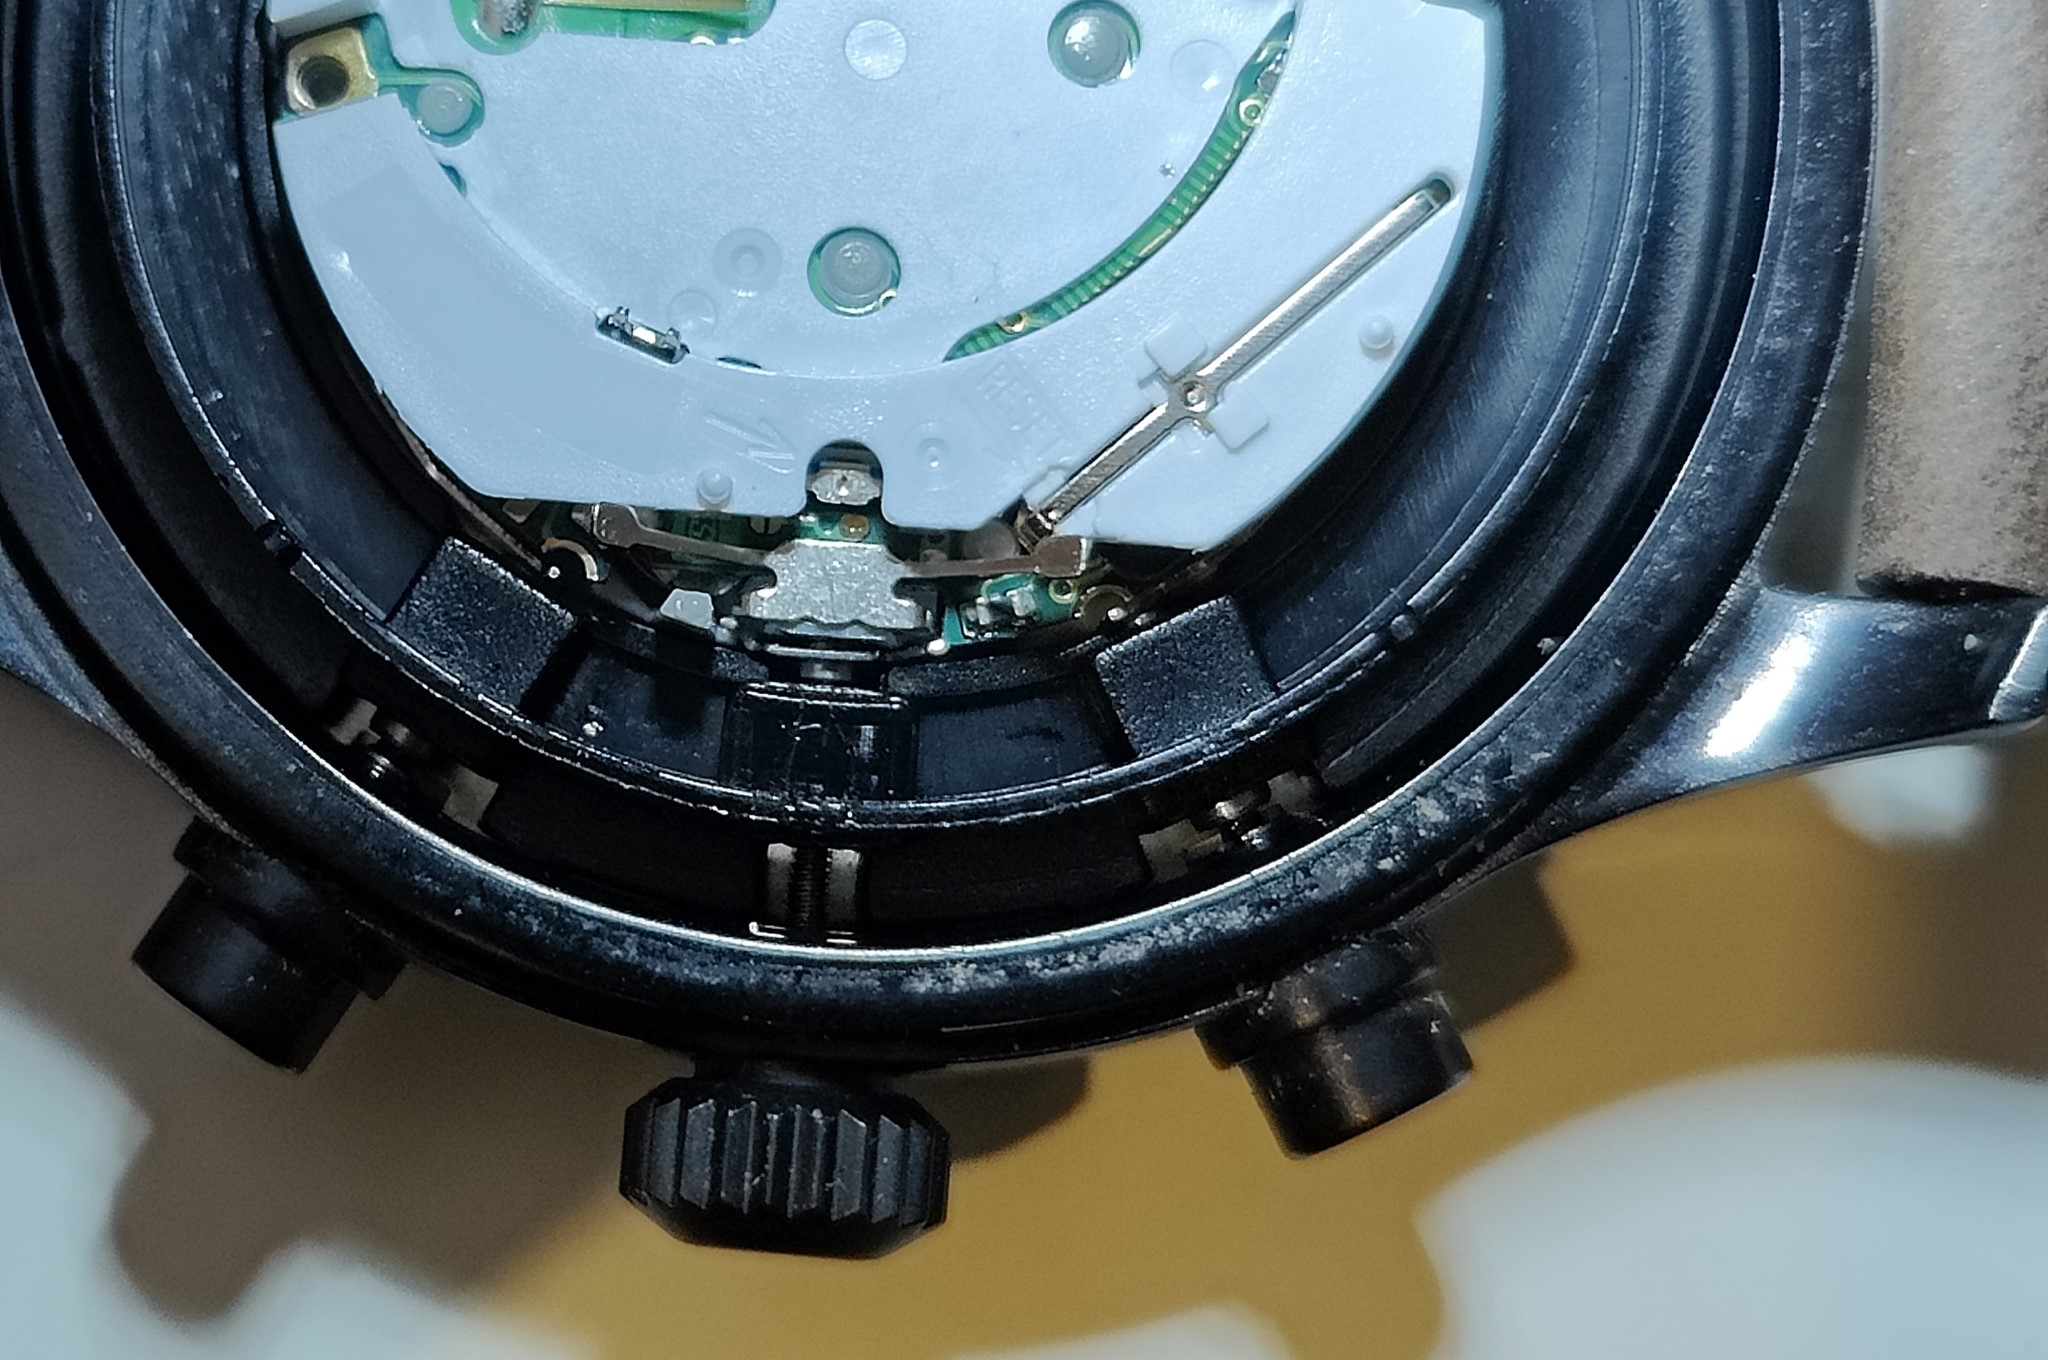 Timex chronograph pusher repair